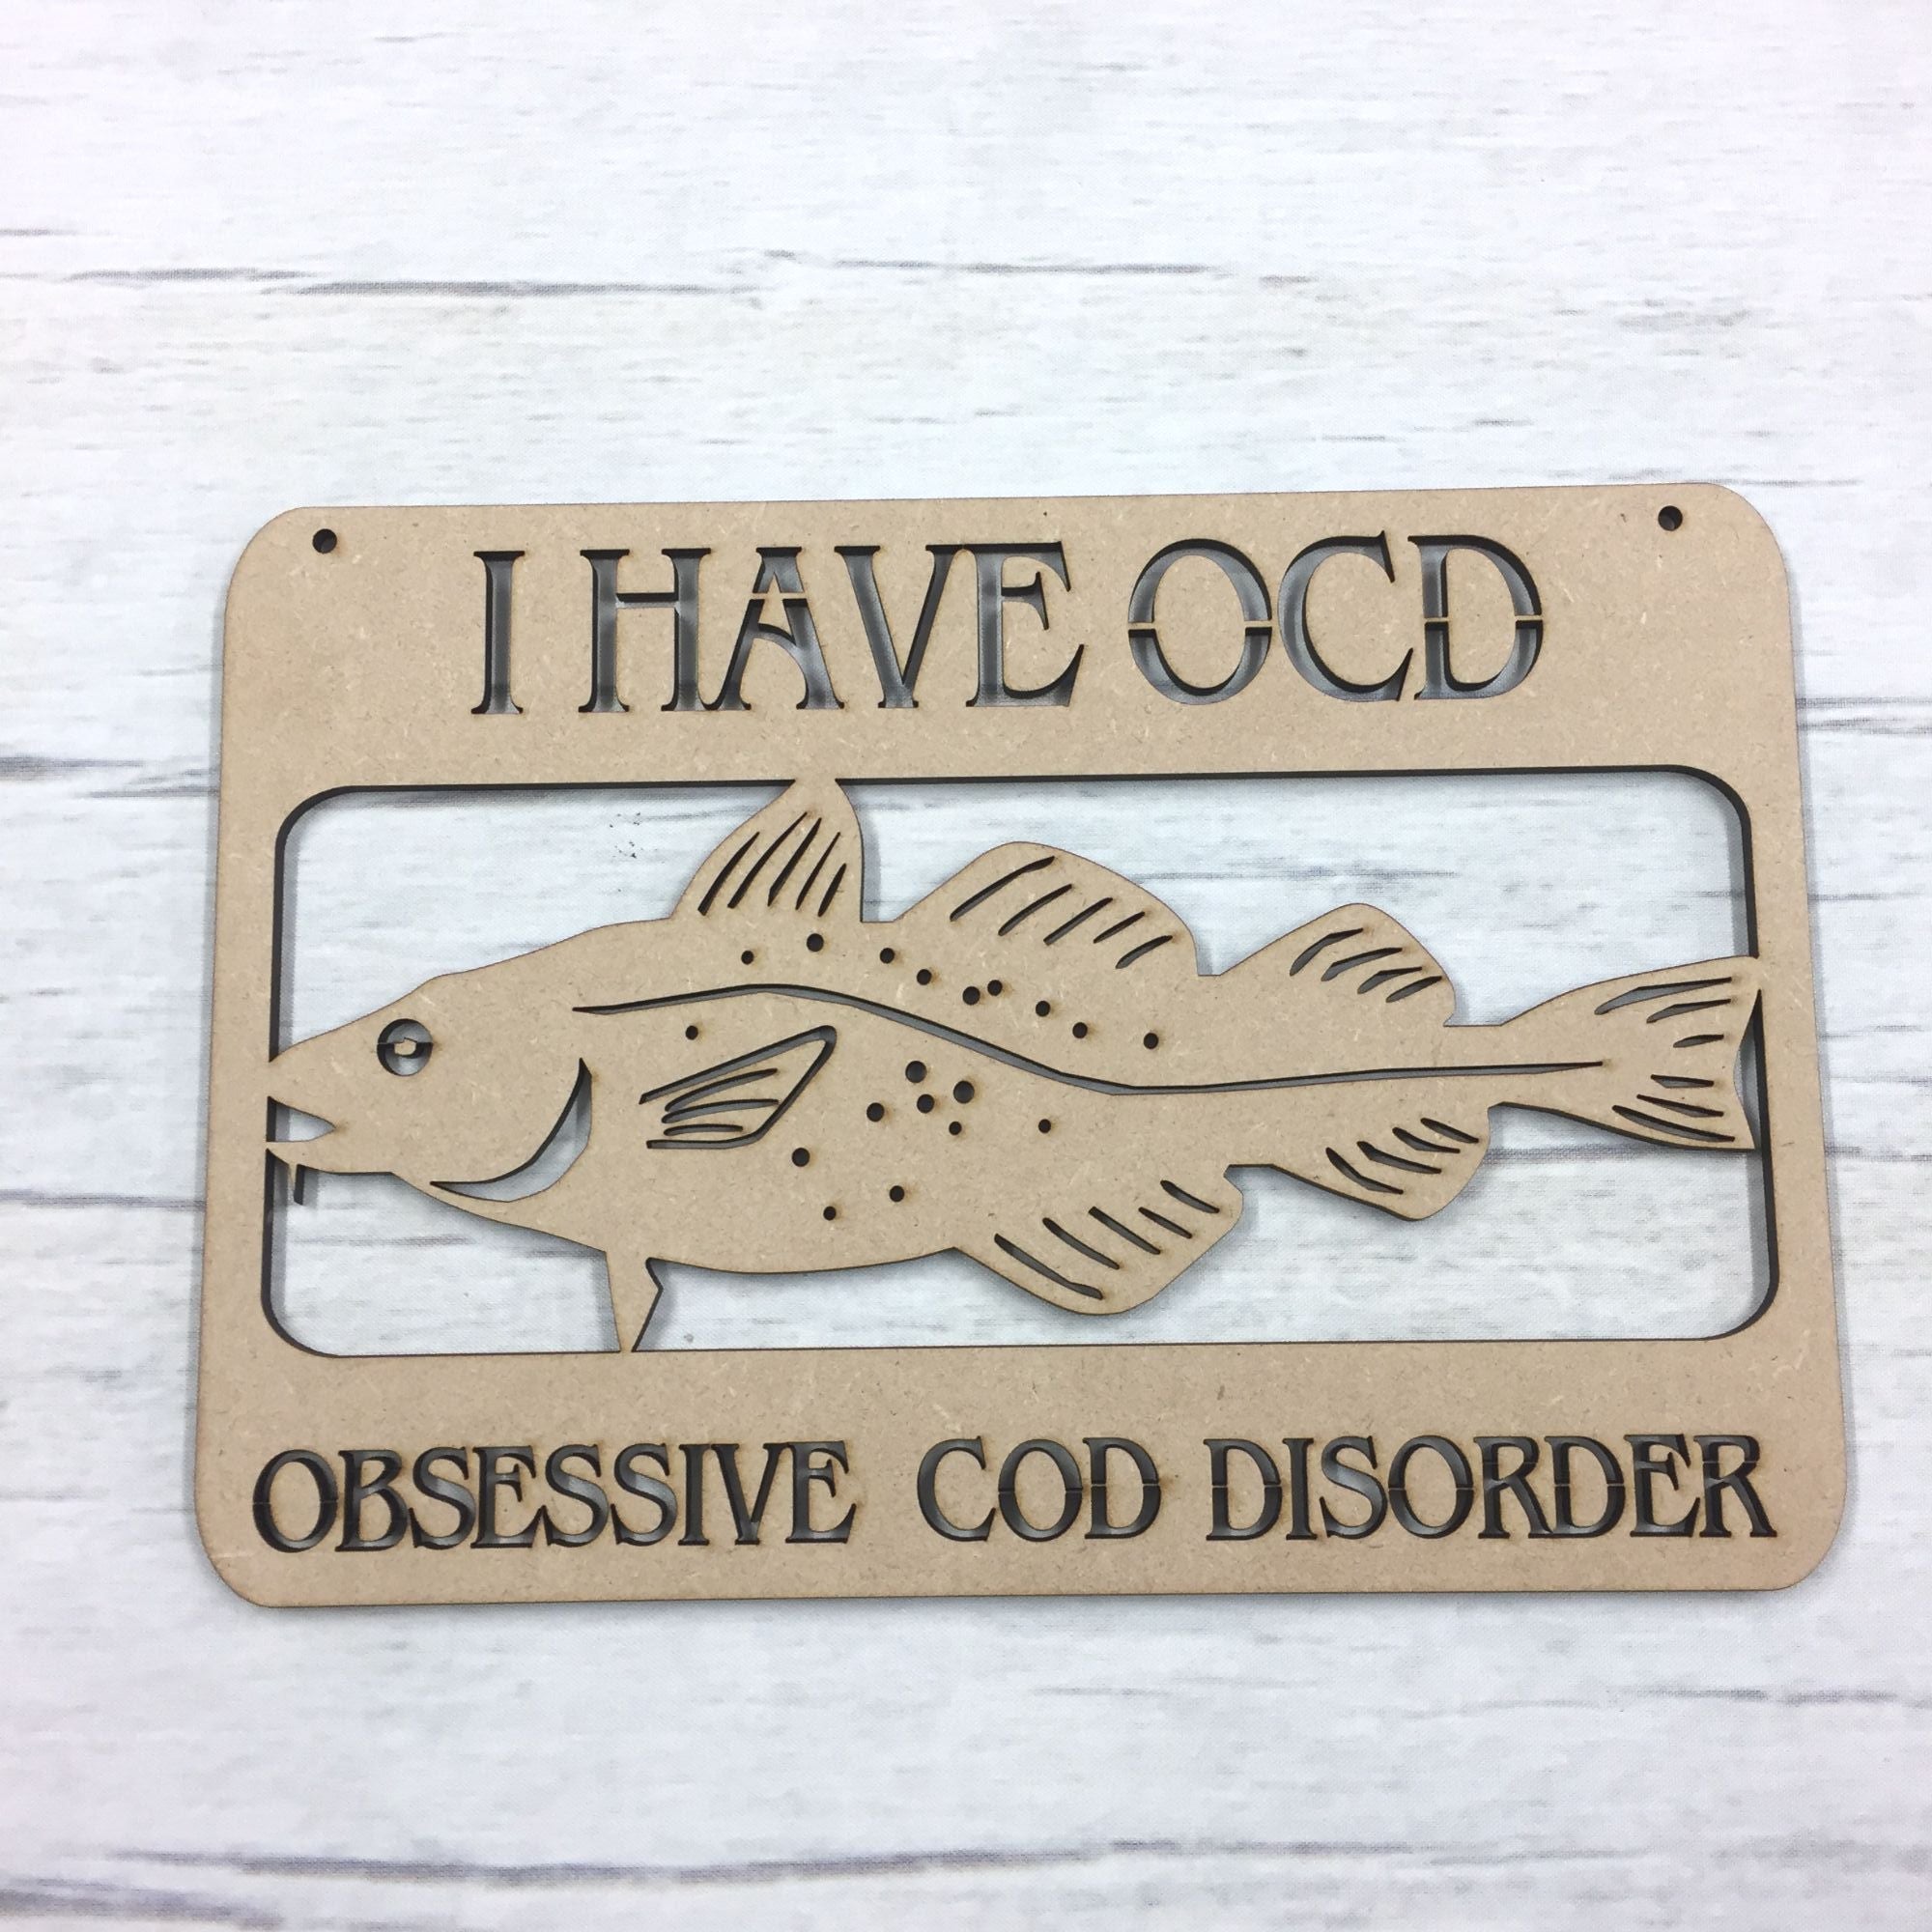 Base MDF - OCD - 'Obsessive Cod Disorder' door plaque